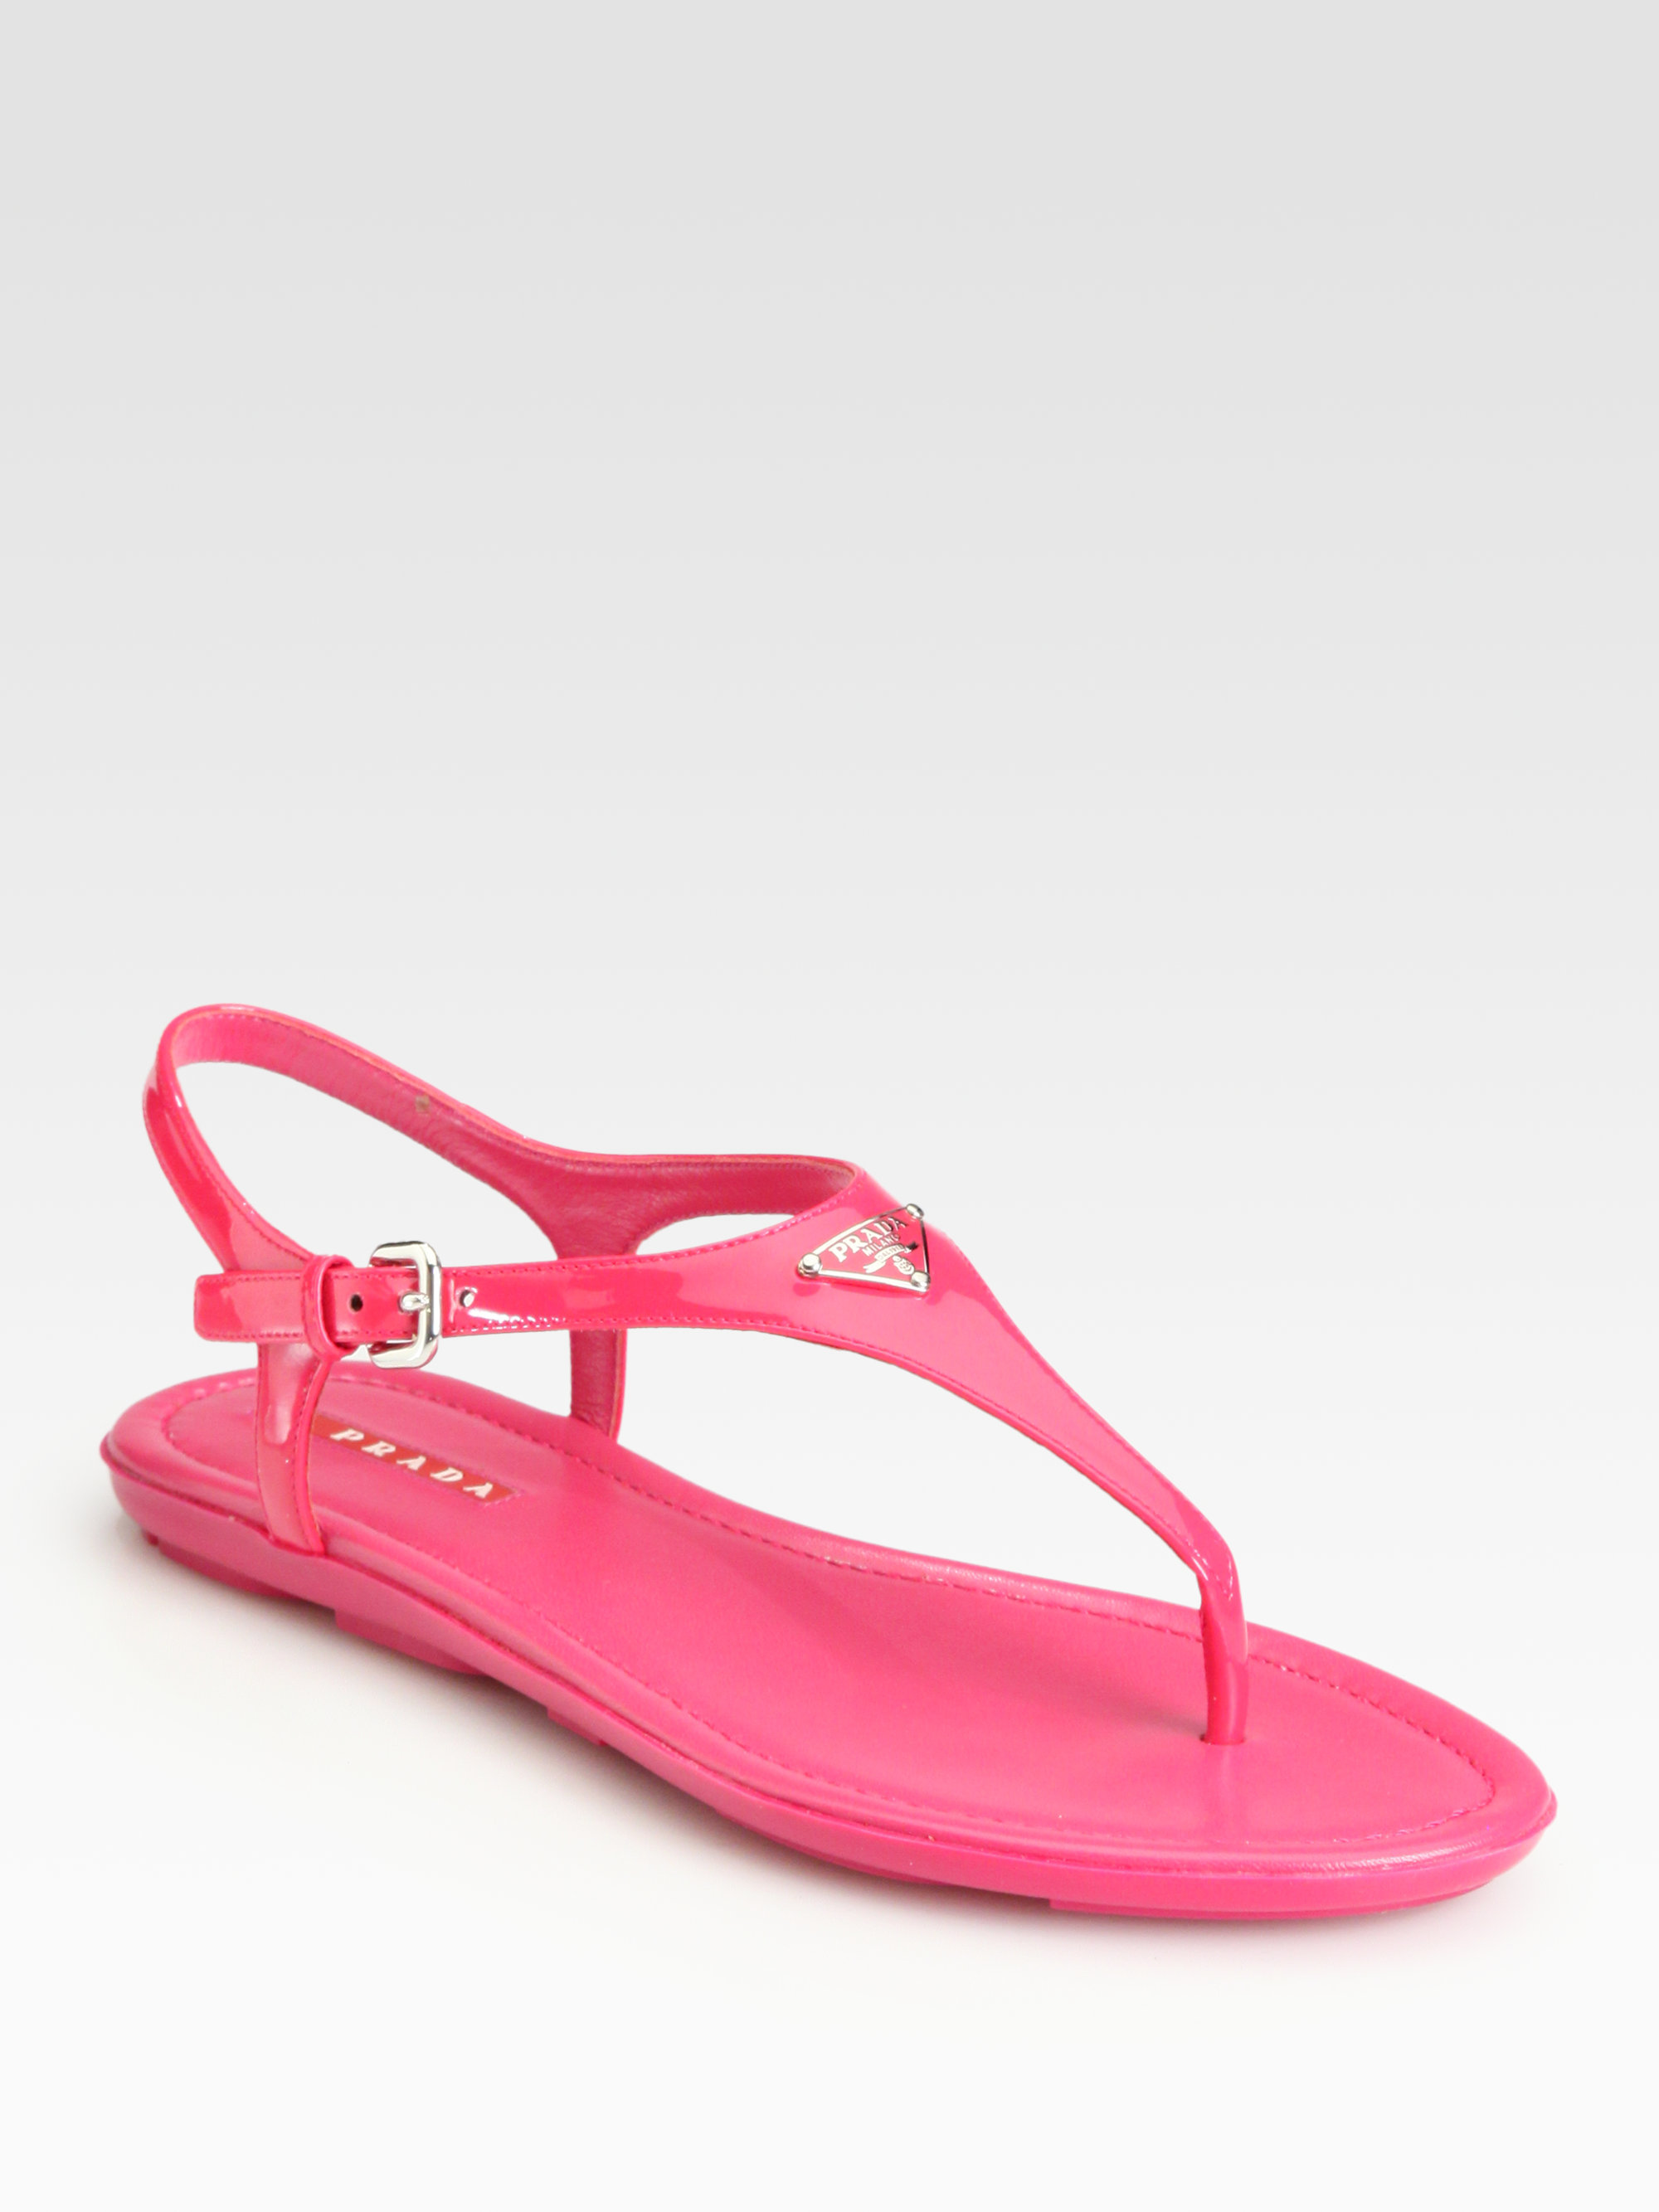 forbruger Konsekvenser overraskende Prada Patent Leather Thong Sandals in Fuchsia (Pink) - Lyst